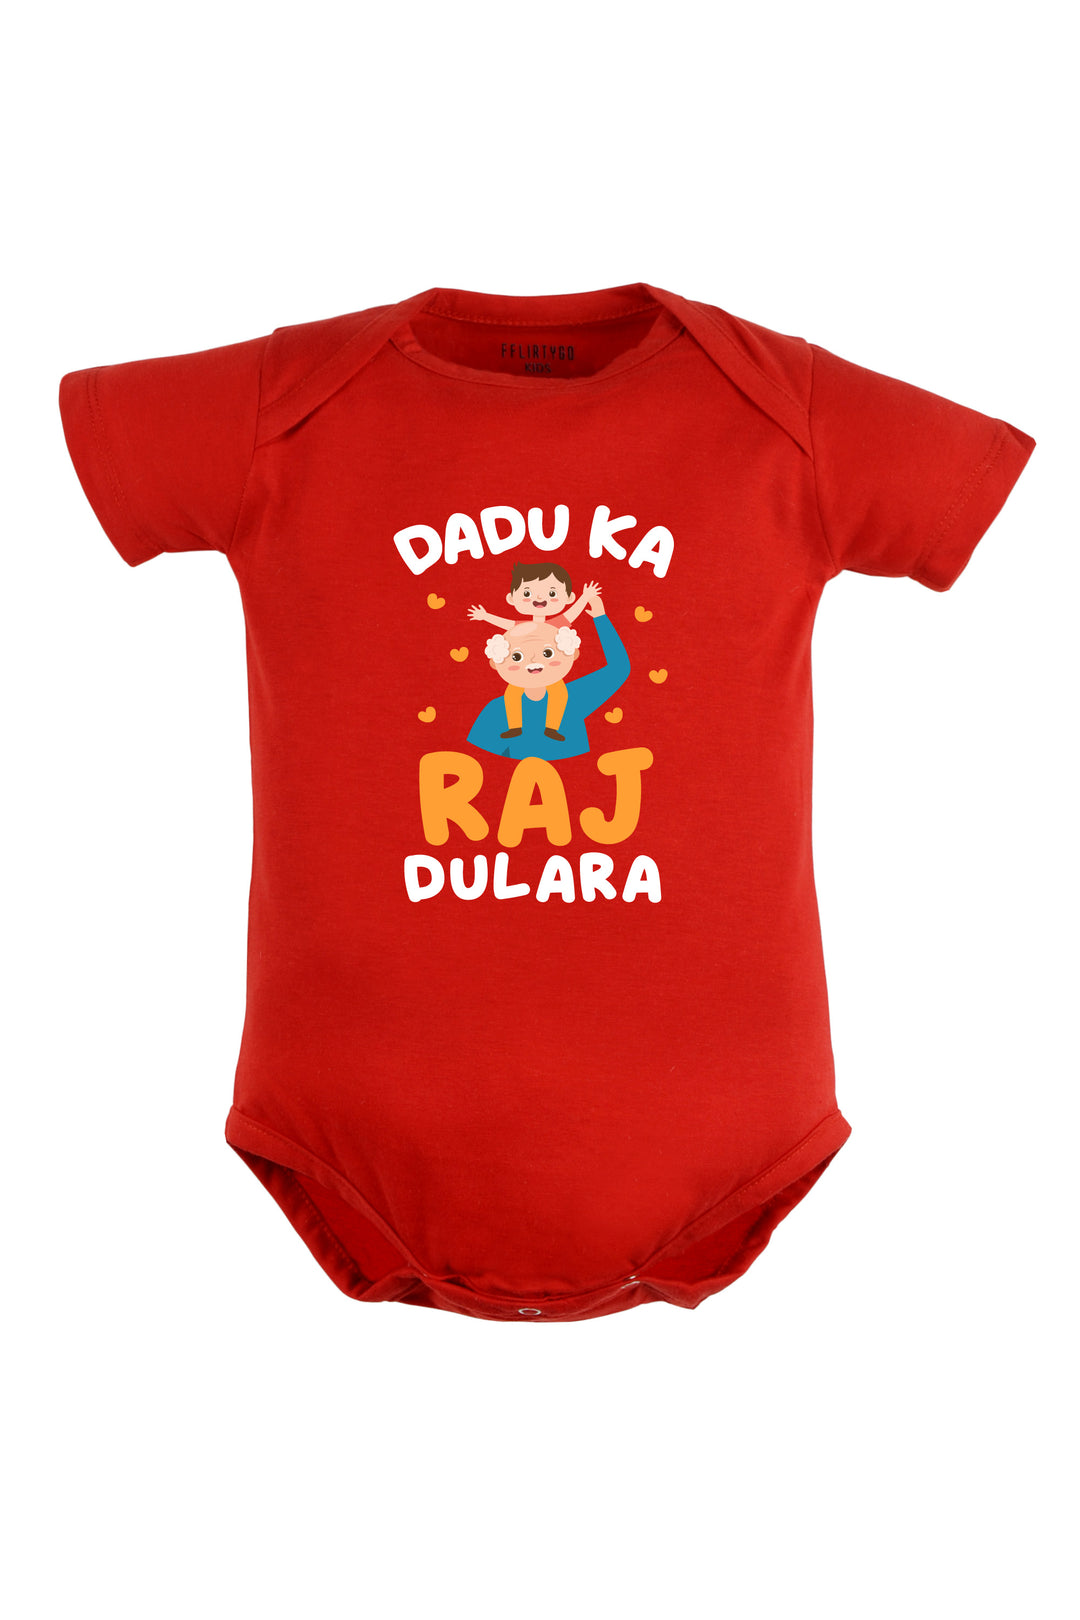 Dadu Ka Raj Dulara Baby Romper | Onesies